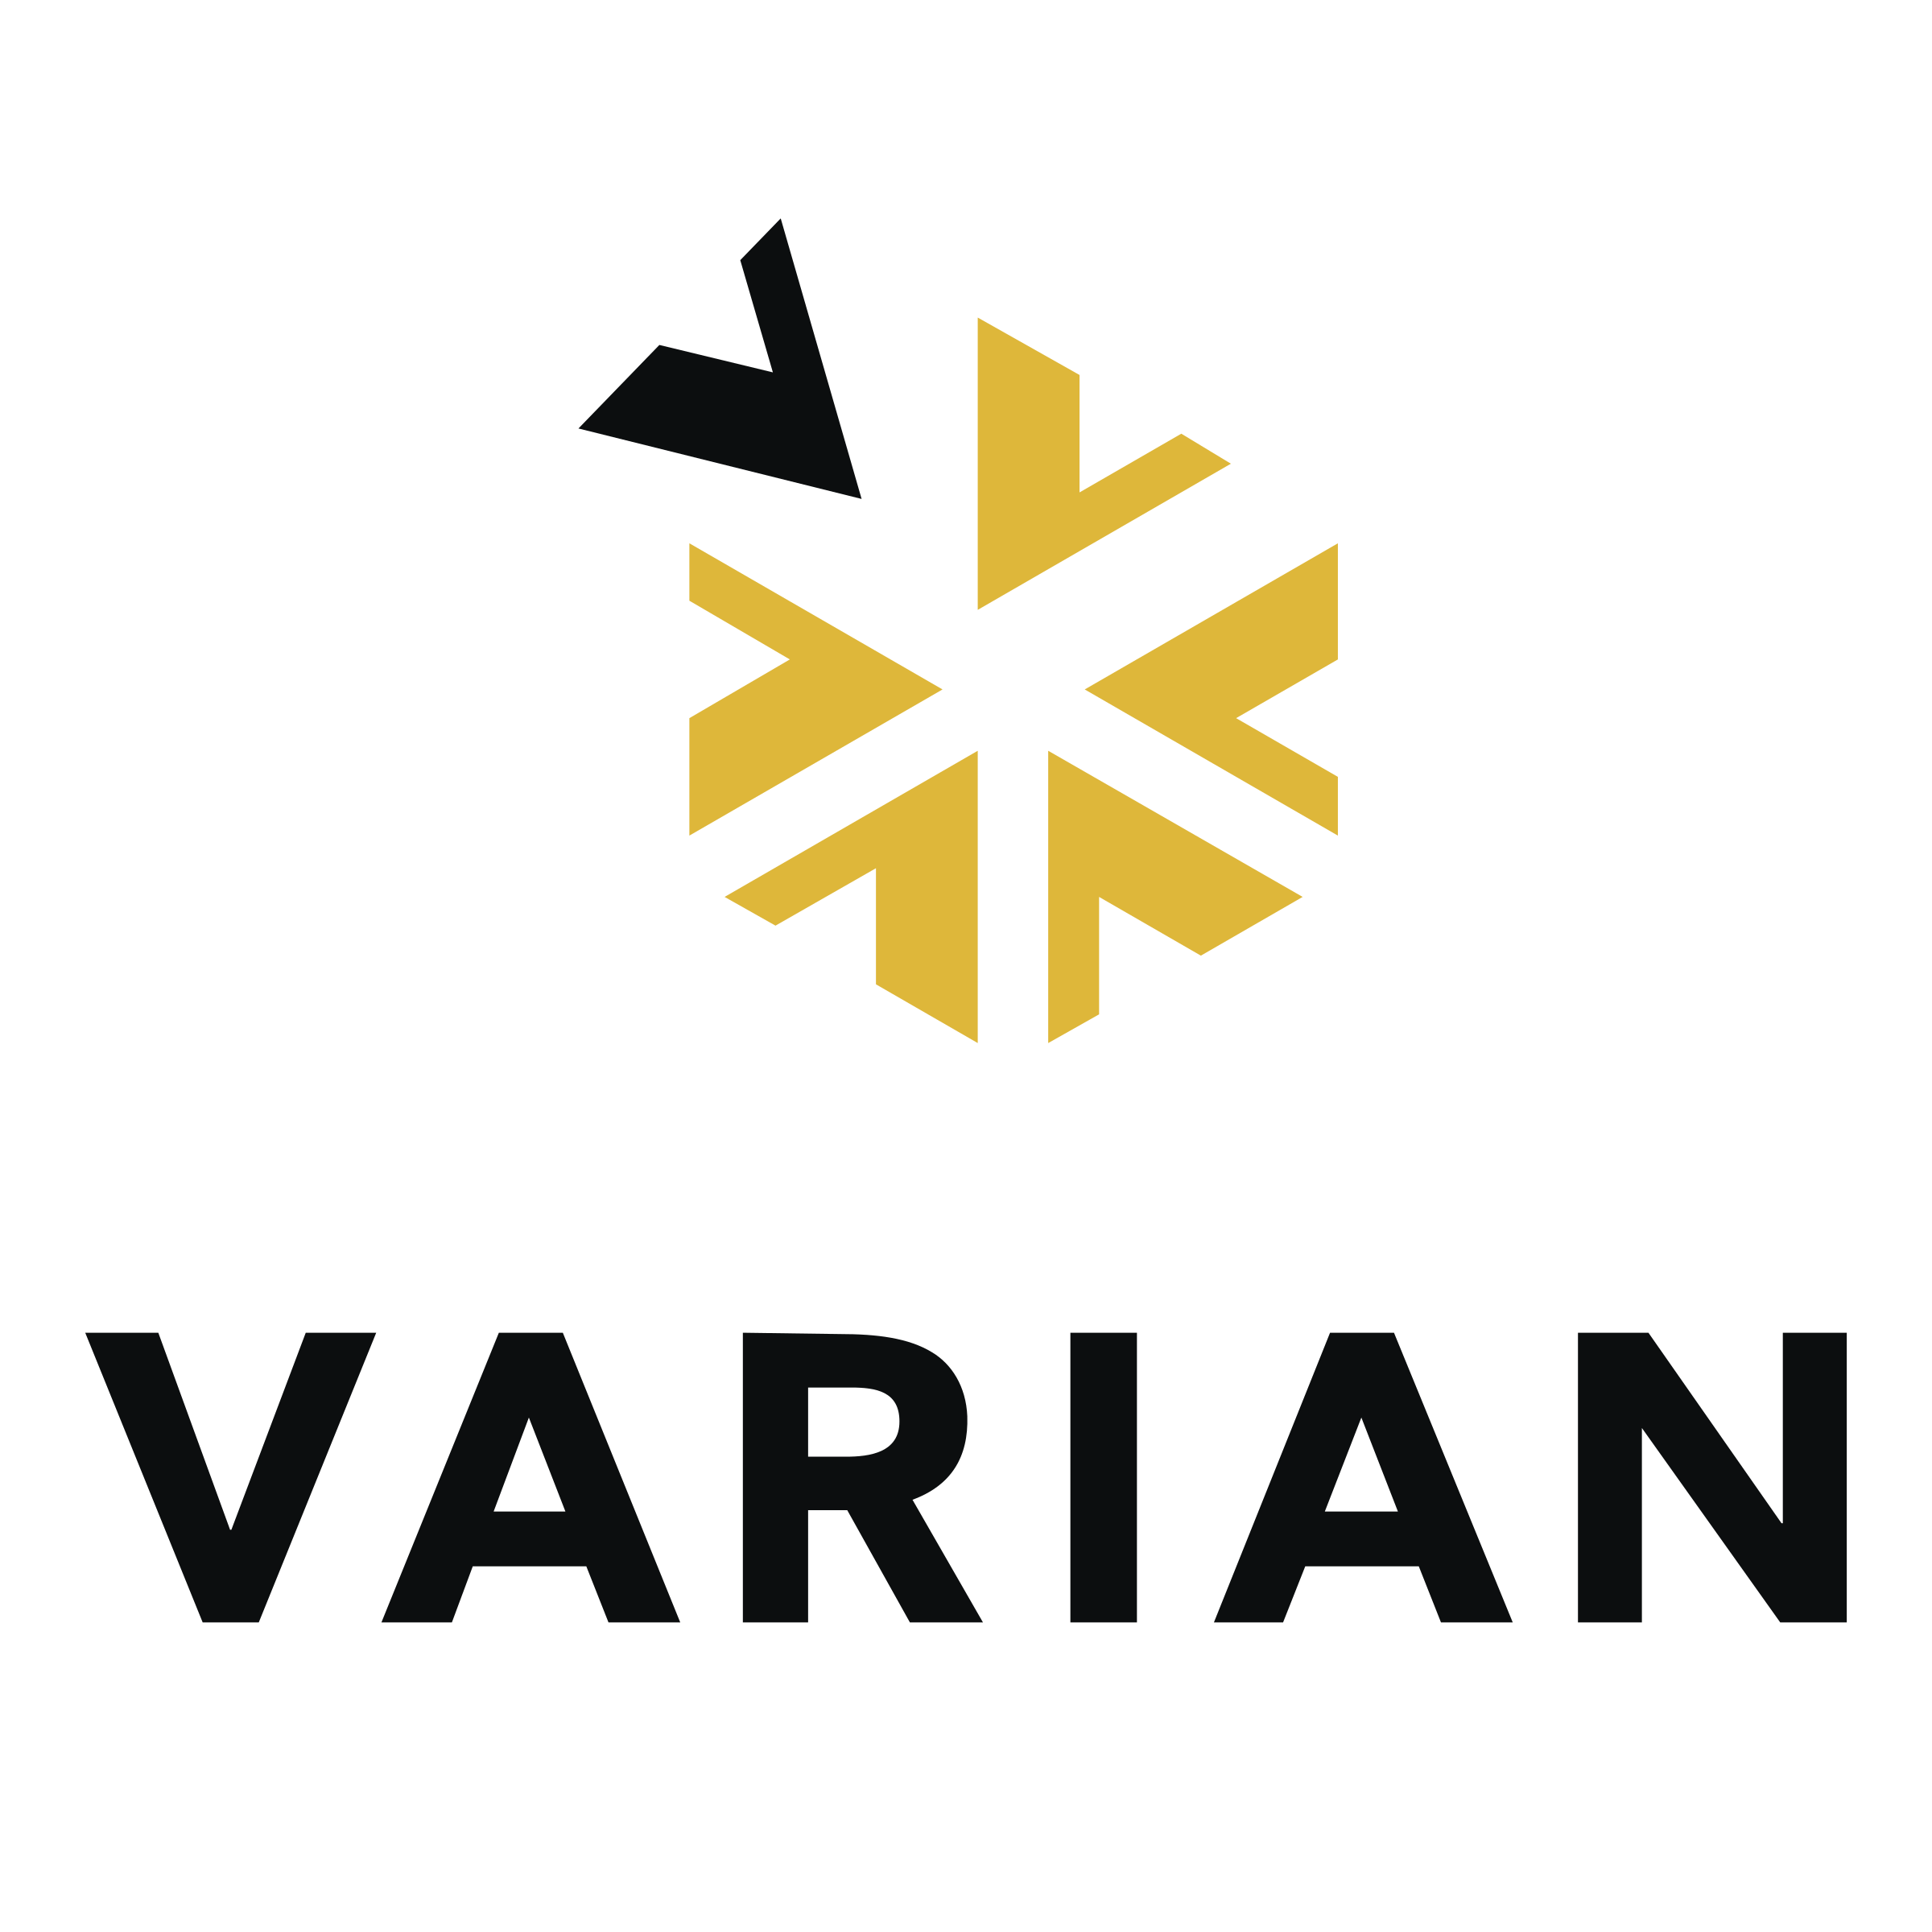 Varian Logo - Varian Logo PNG Transparent & SVG Vector - Freebie Supply